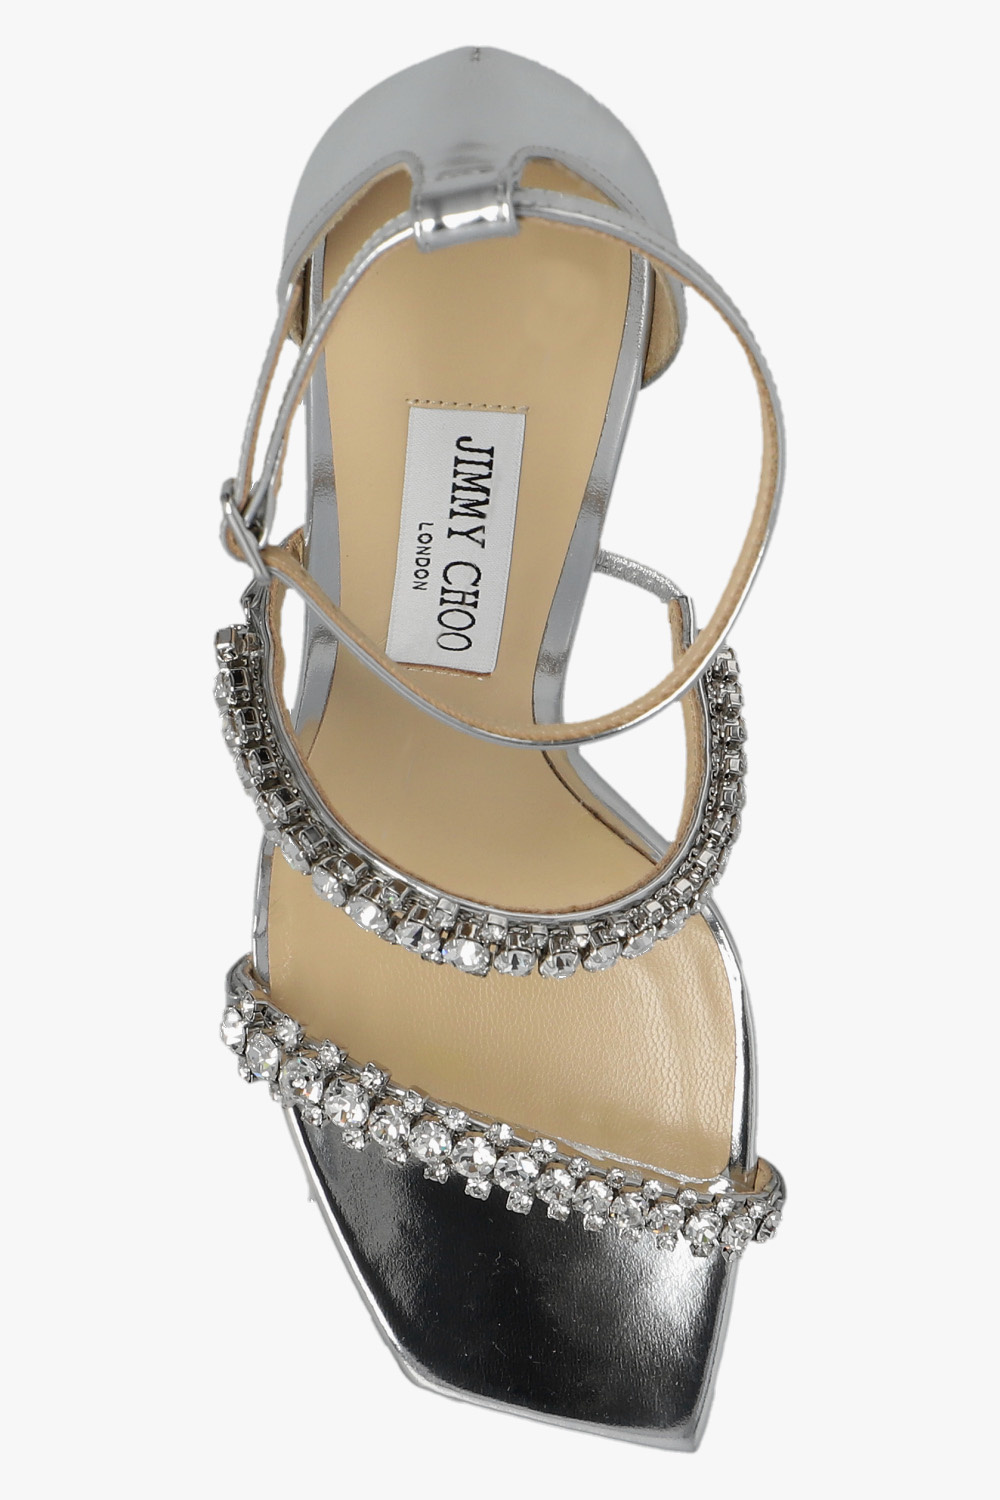 Jimmy Choo ‘Bing’ leather heeled sandals